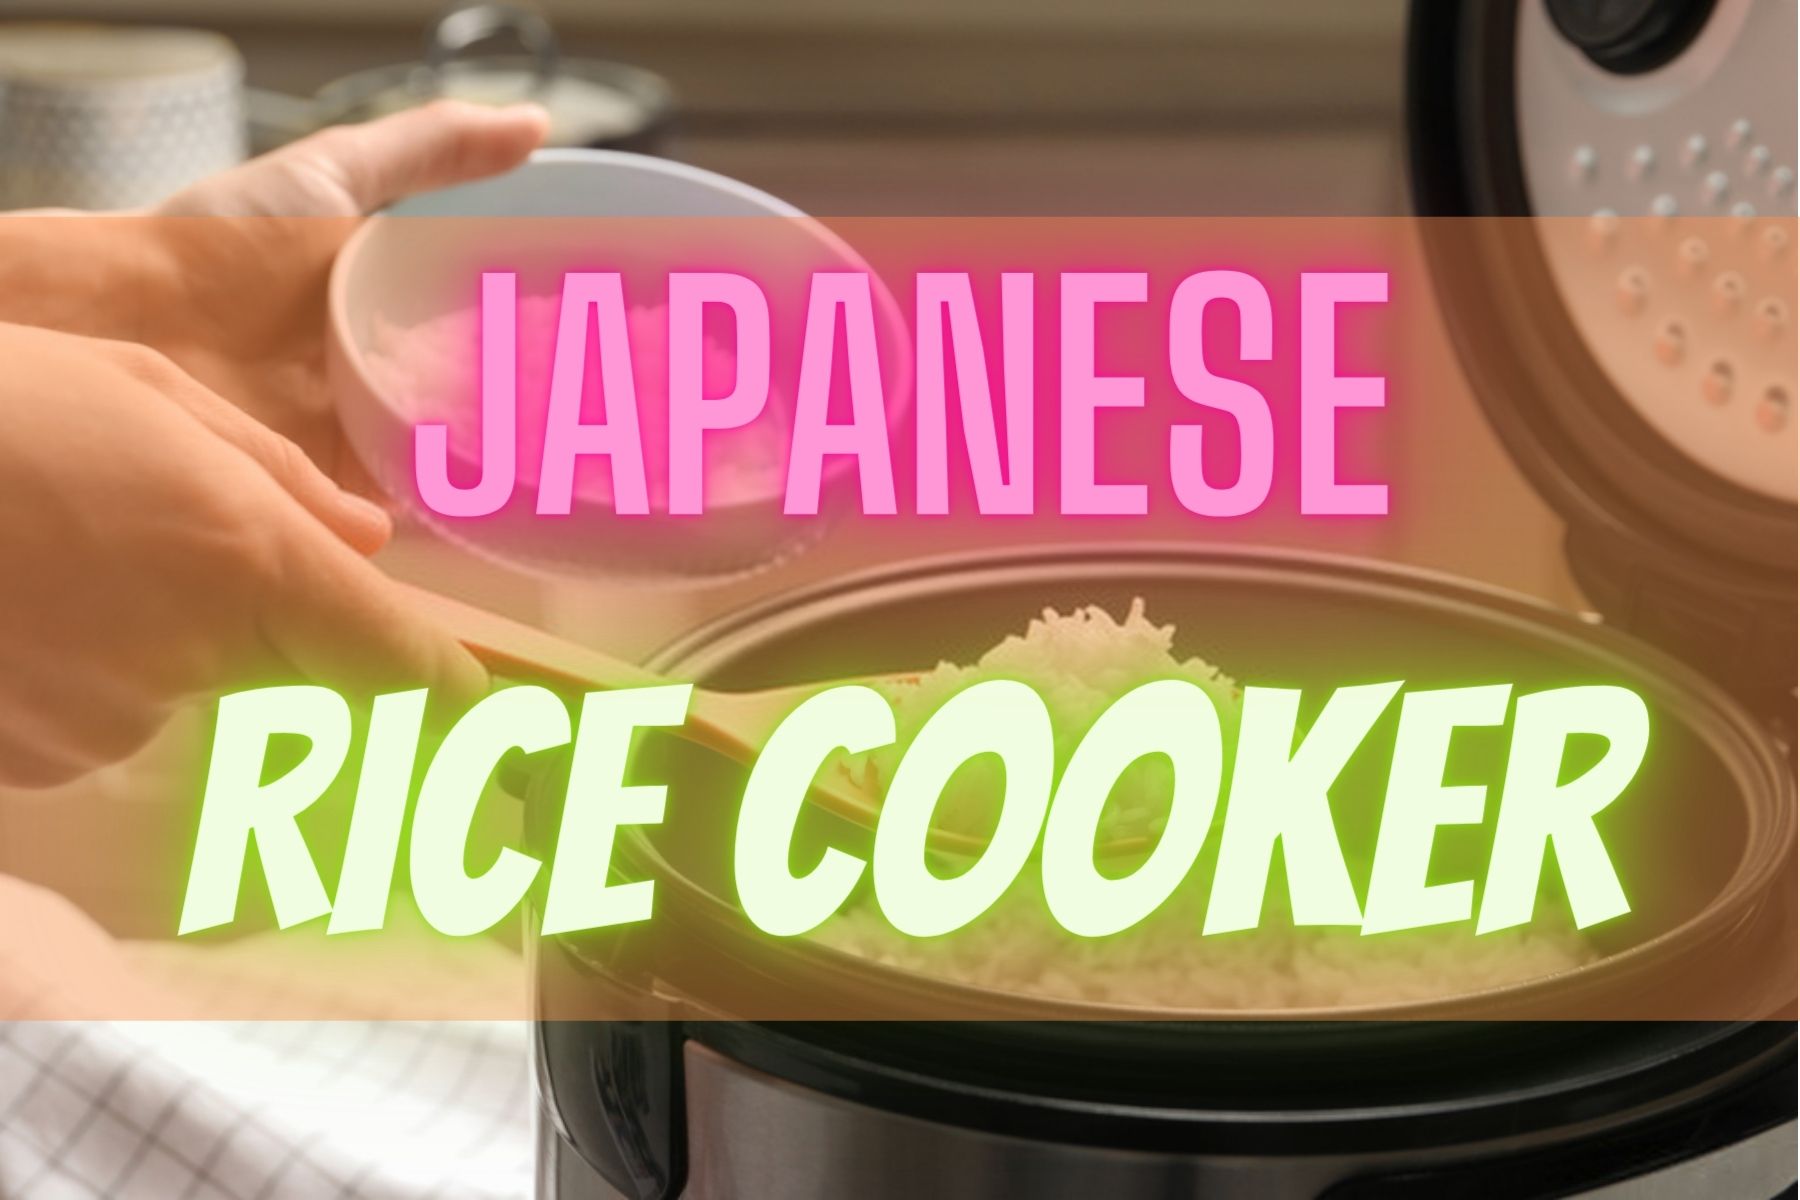 Best Japanese Rice Cooker